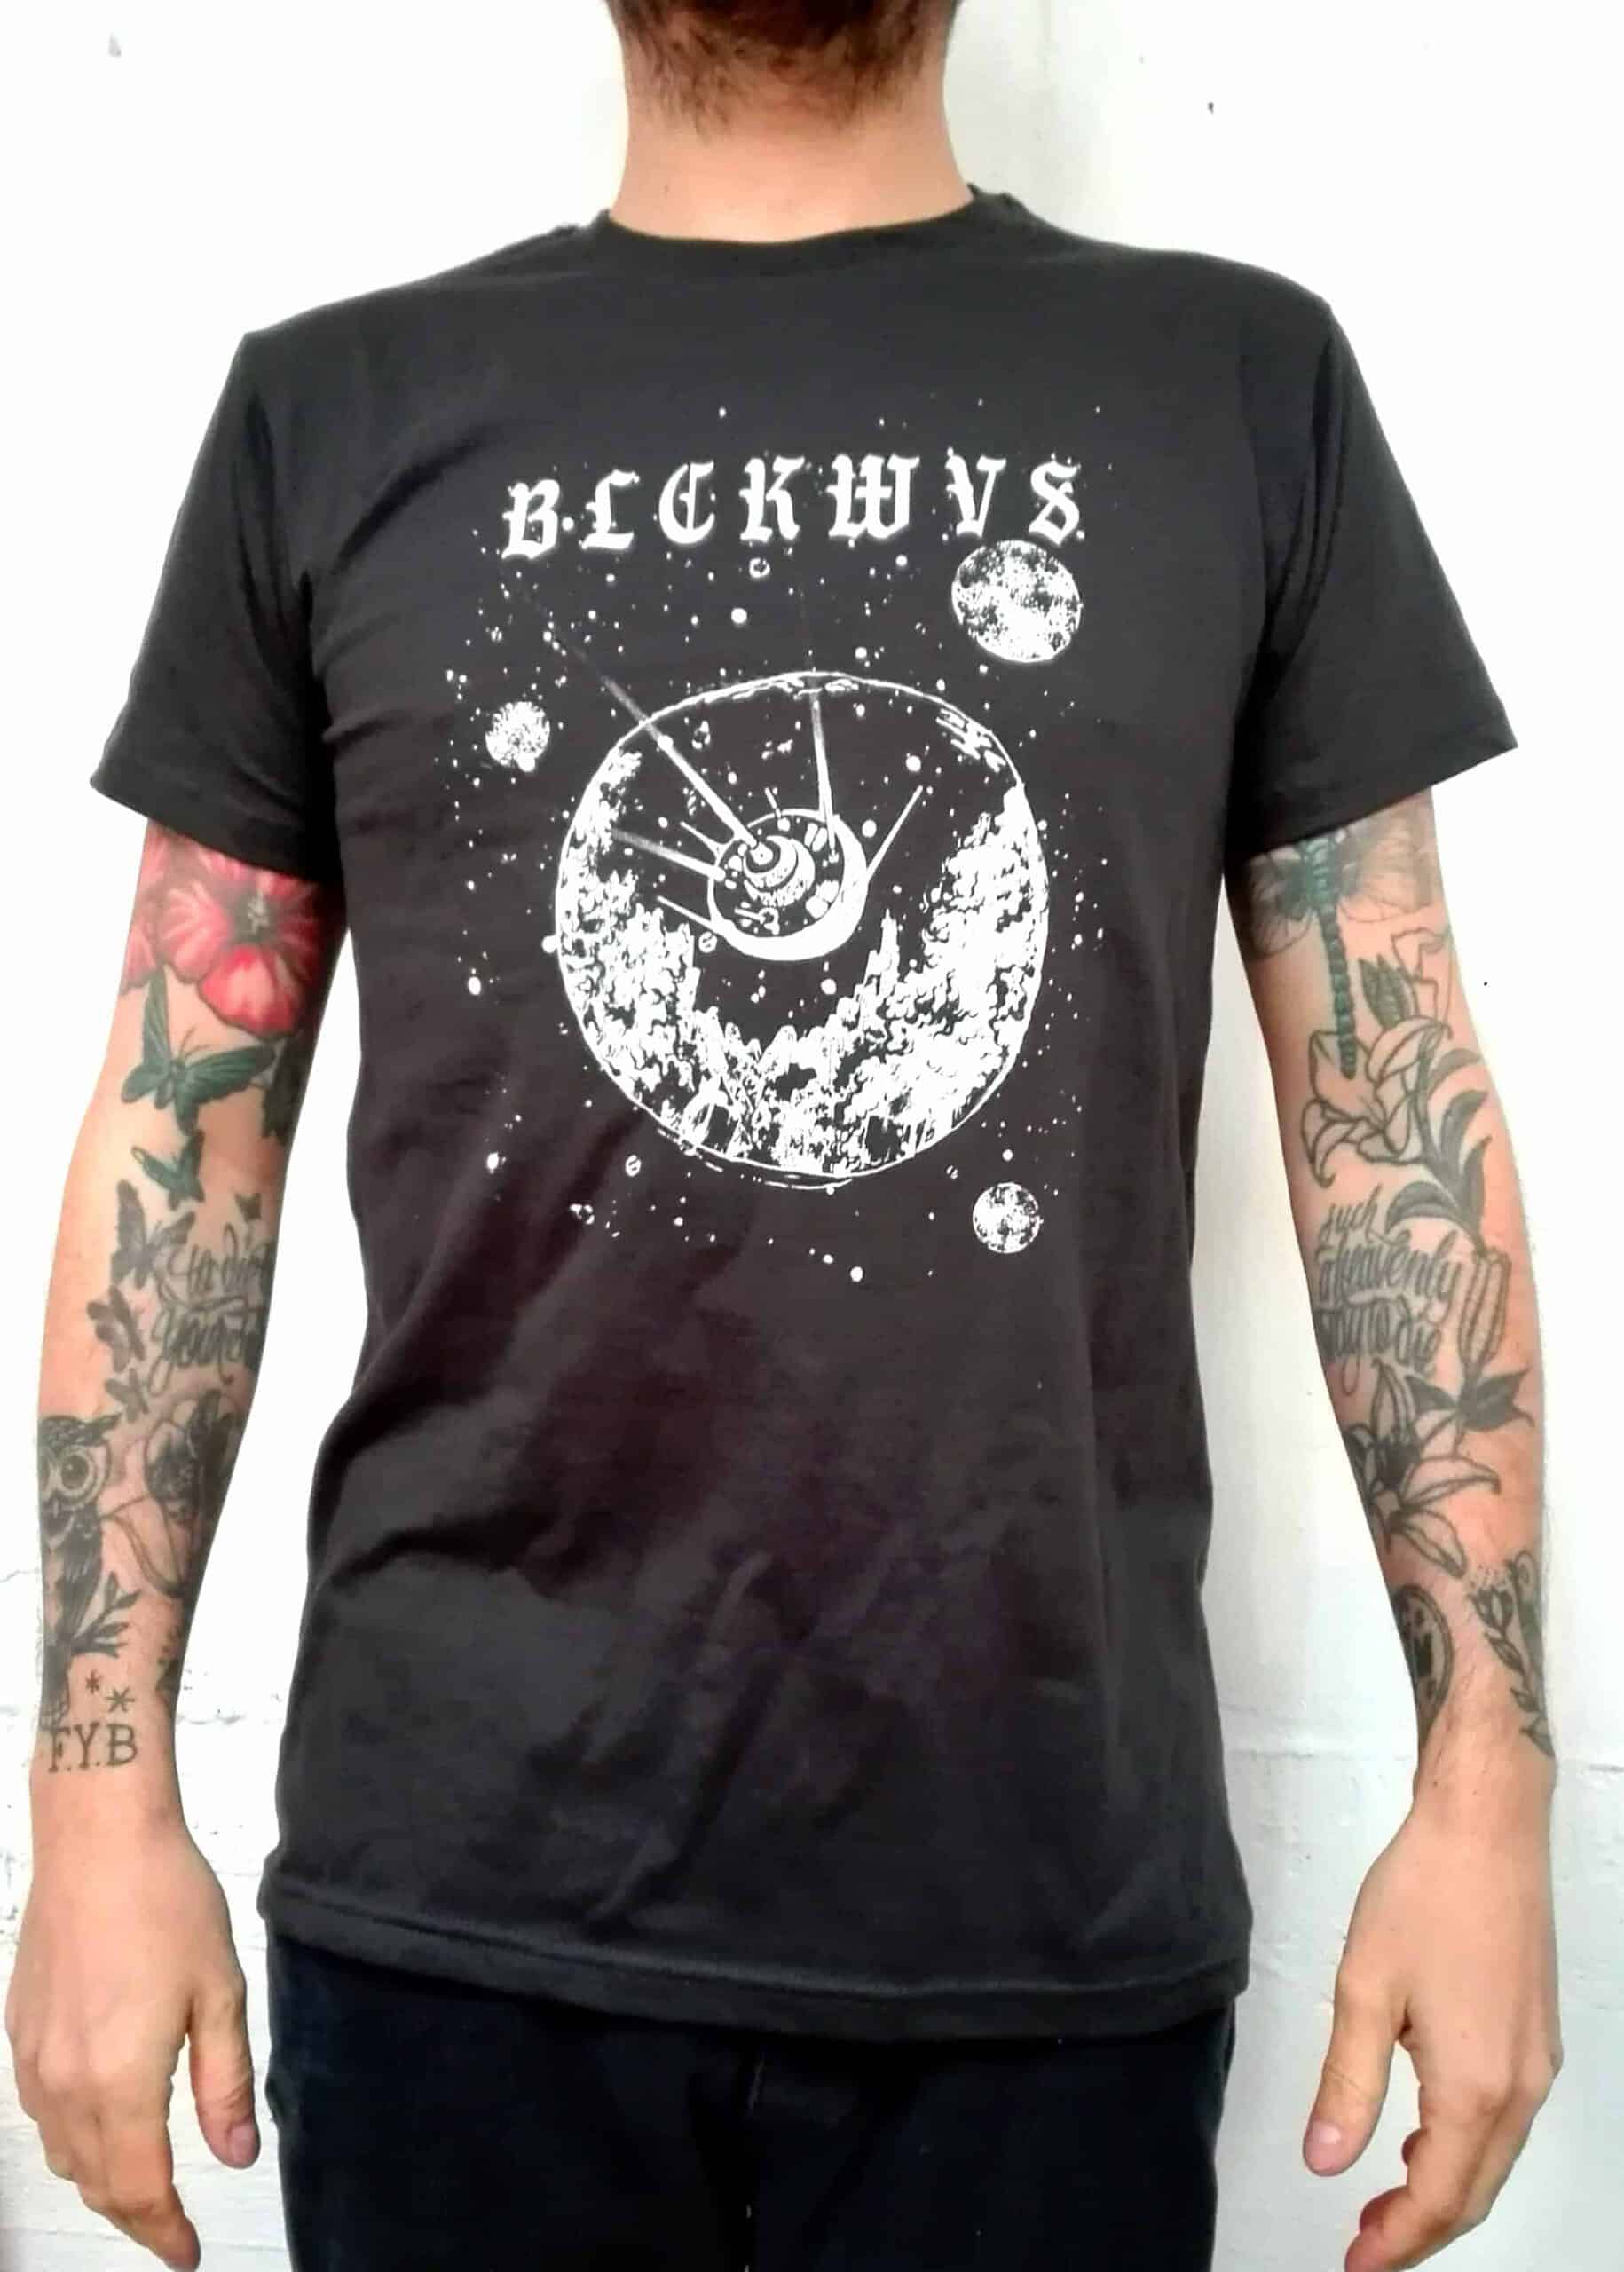 BLCKWVS – 0160 Space Shirt Exclusive BLCKWVS TCM shirt! 60 copies printed